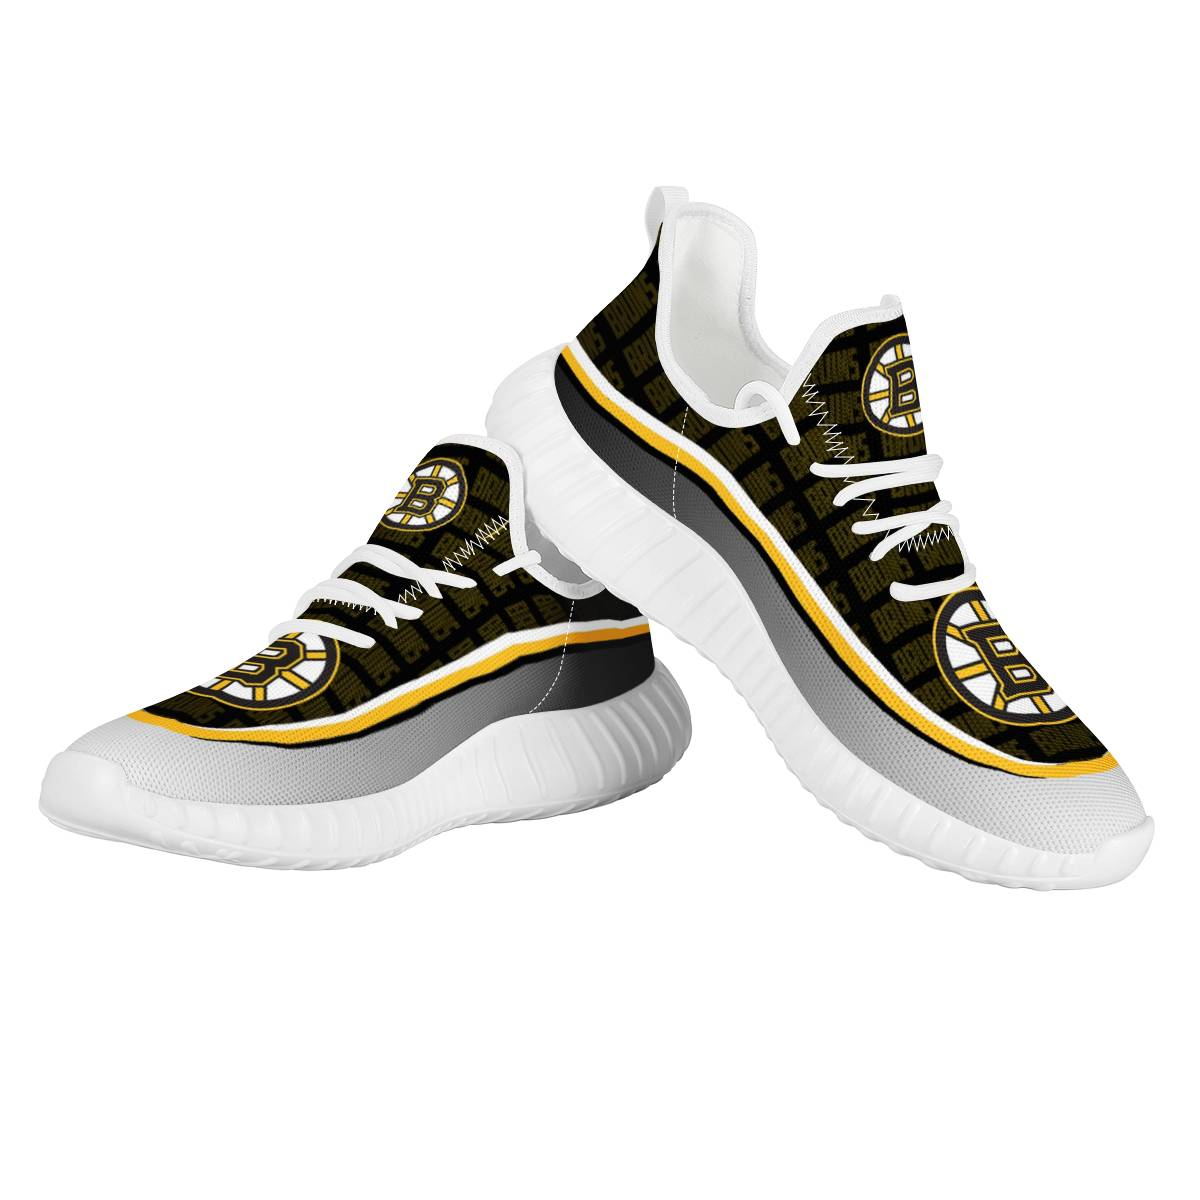 Men's NHL Boston Bruins Mesh Knit Sneakers/Shoes 001